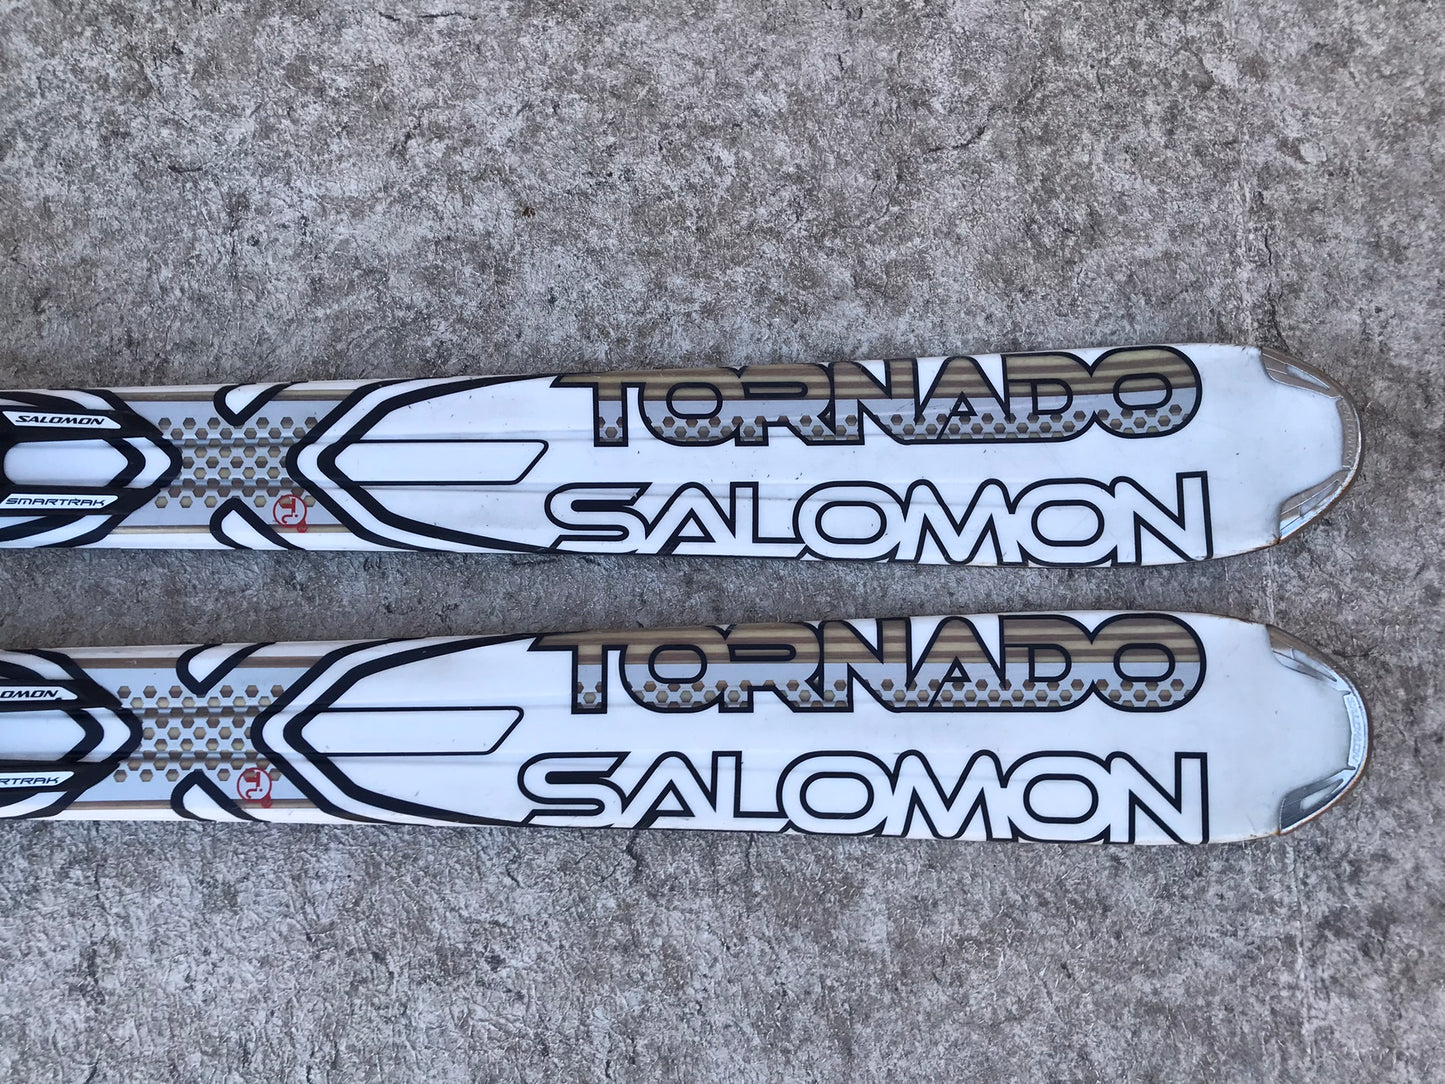 Ski 163 Salomon Tornado White Black Tan Parabolic With Bindings